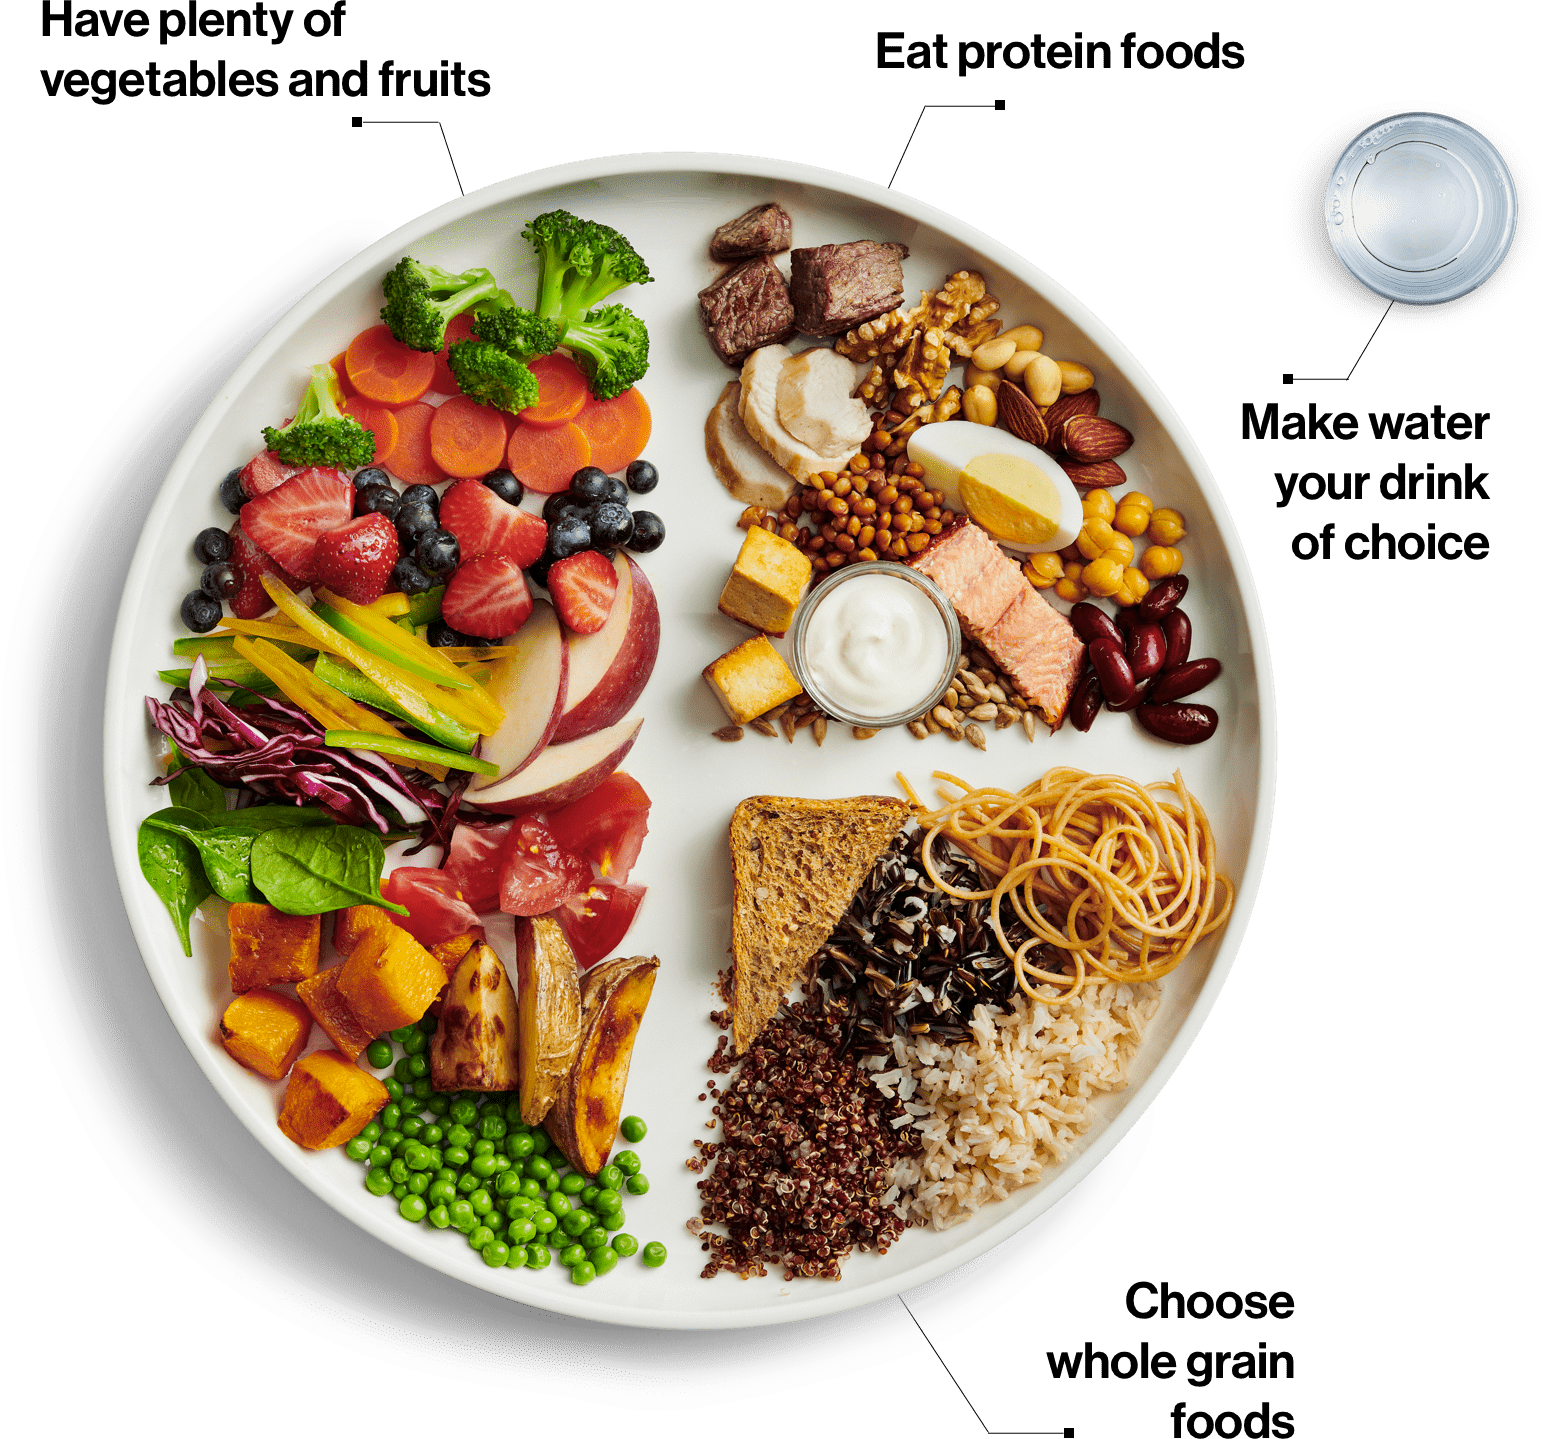 Food guide 2.0 – Proteins, calcium and portions | Nautilus Plus